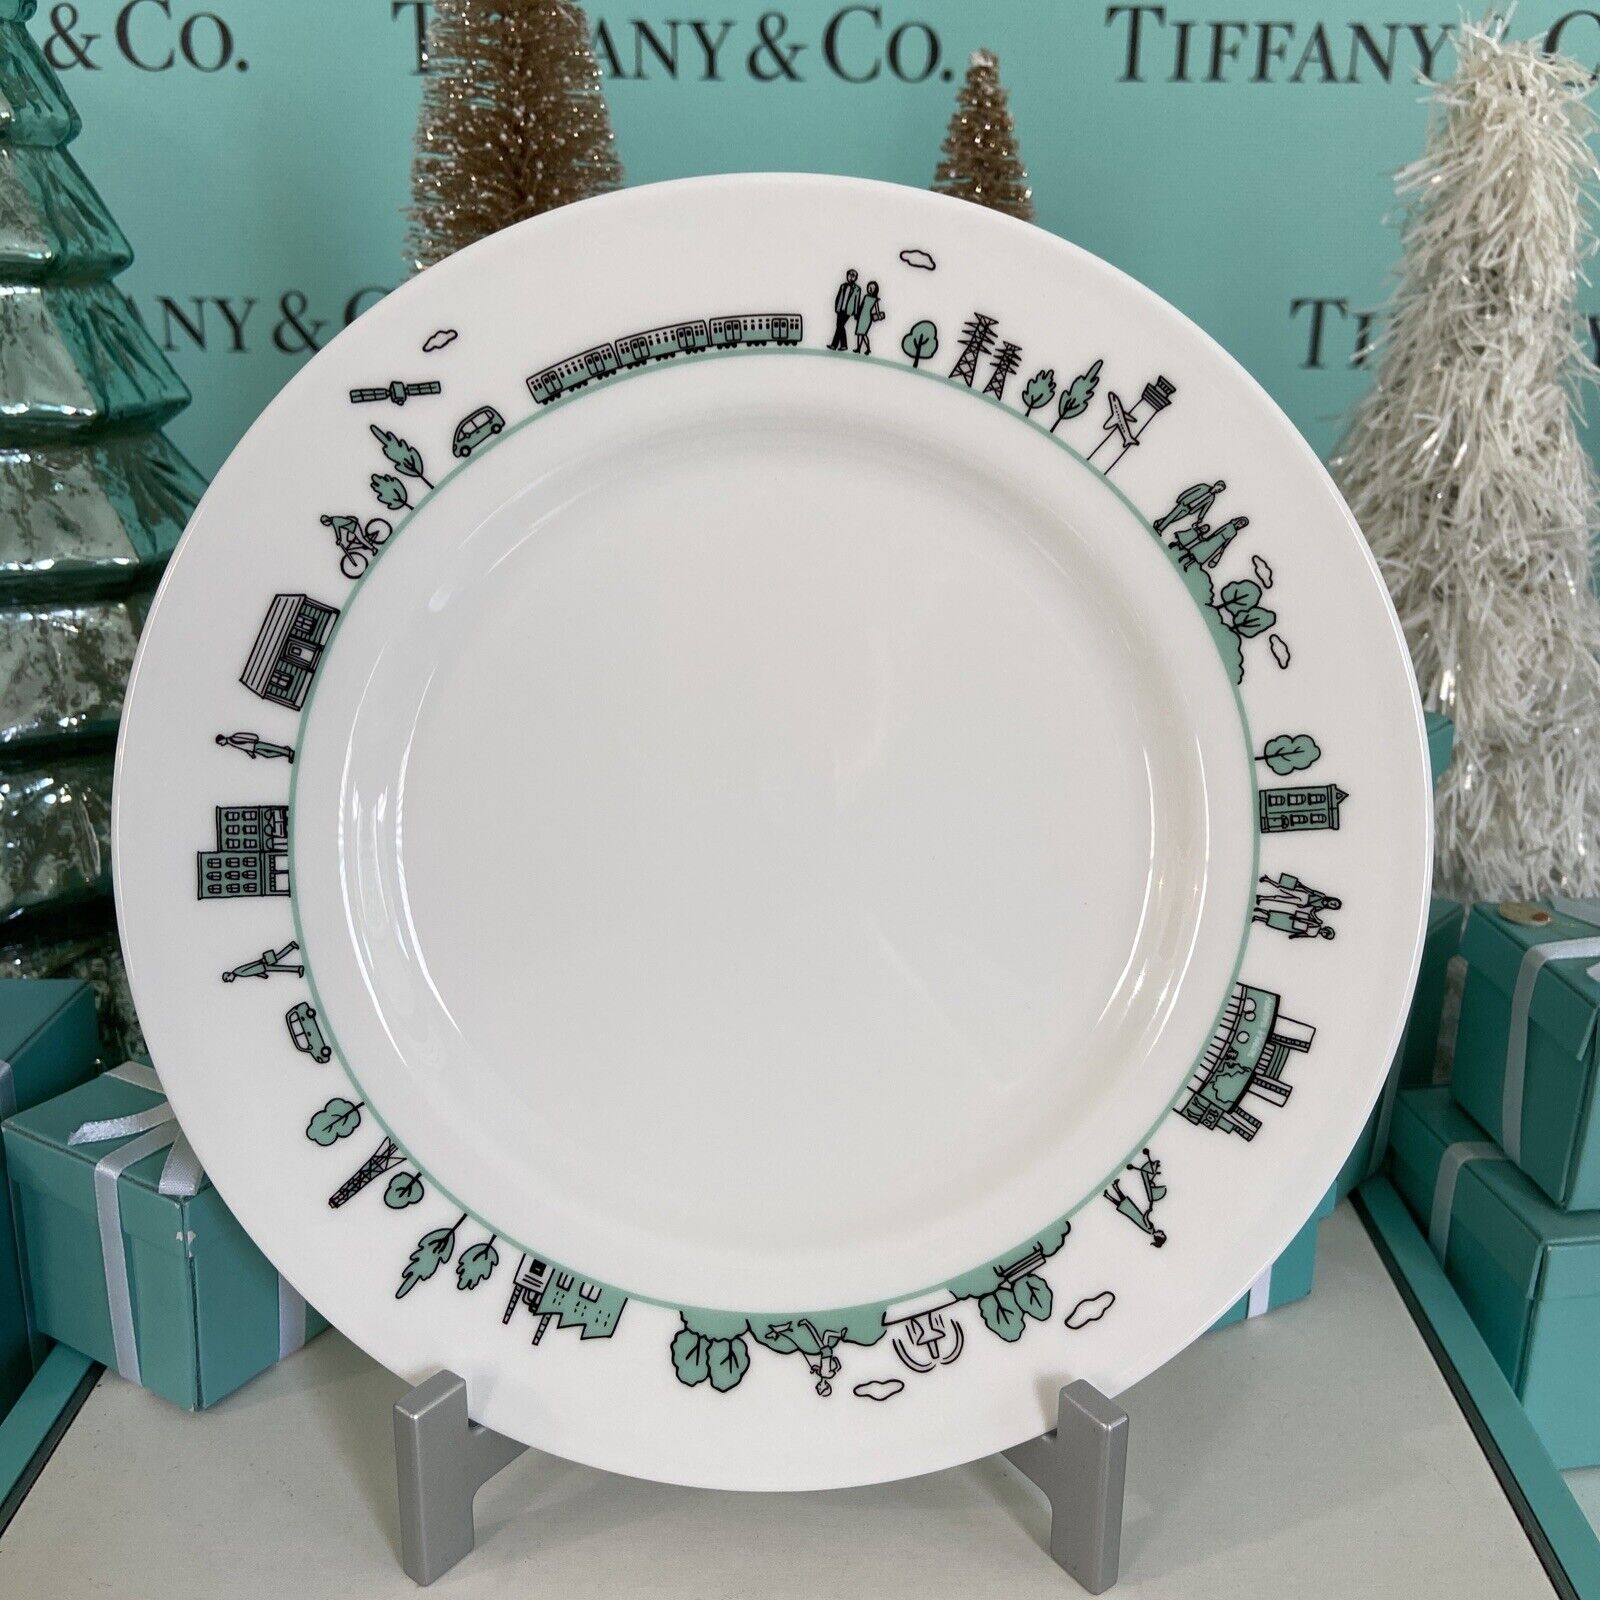 Tiffany&Co Plate Stand Mitsubishi Electric 100th Anniv. Ltd Ed 7.5” W Box New